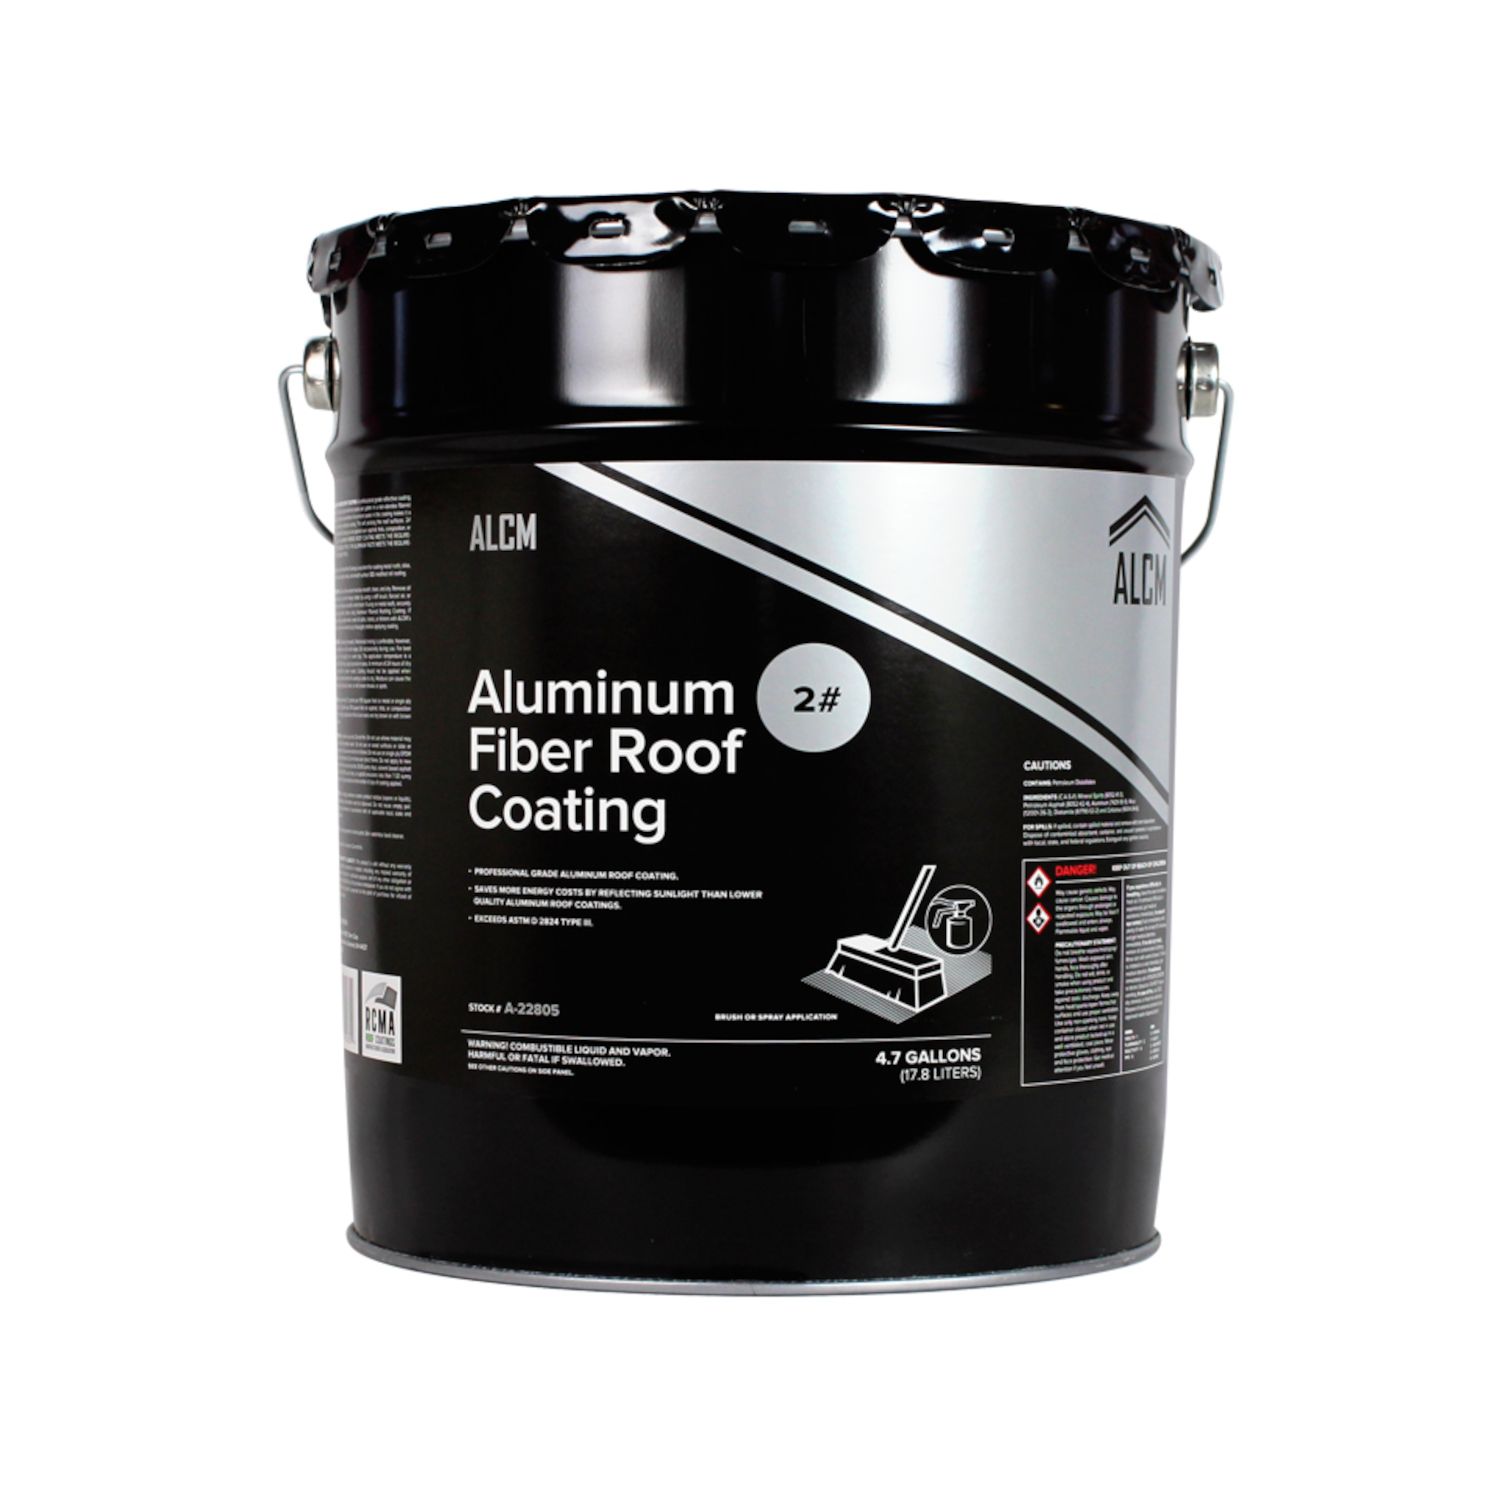 ALCM Aluminum Fiber Roof Coating #2